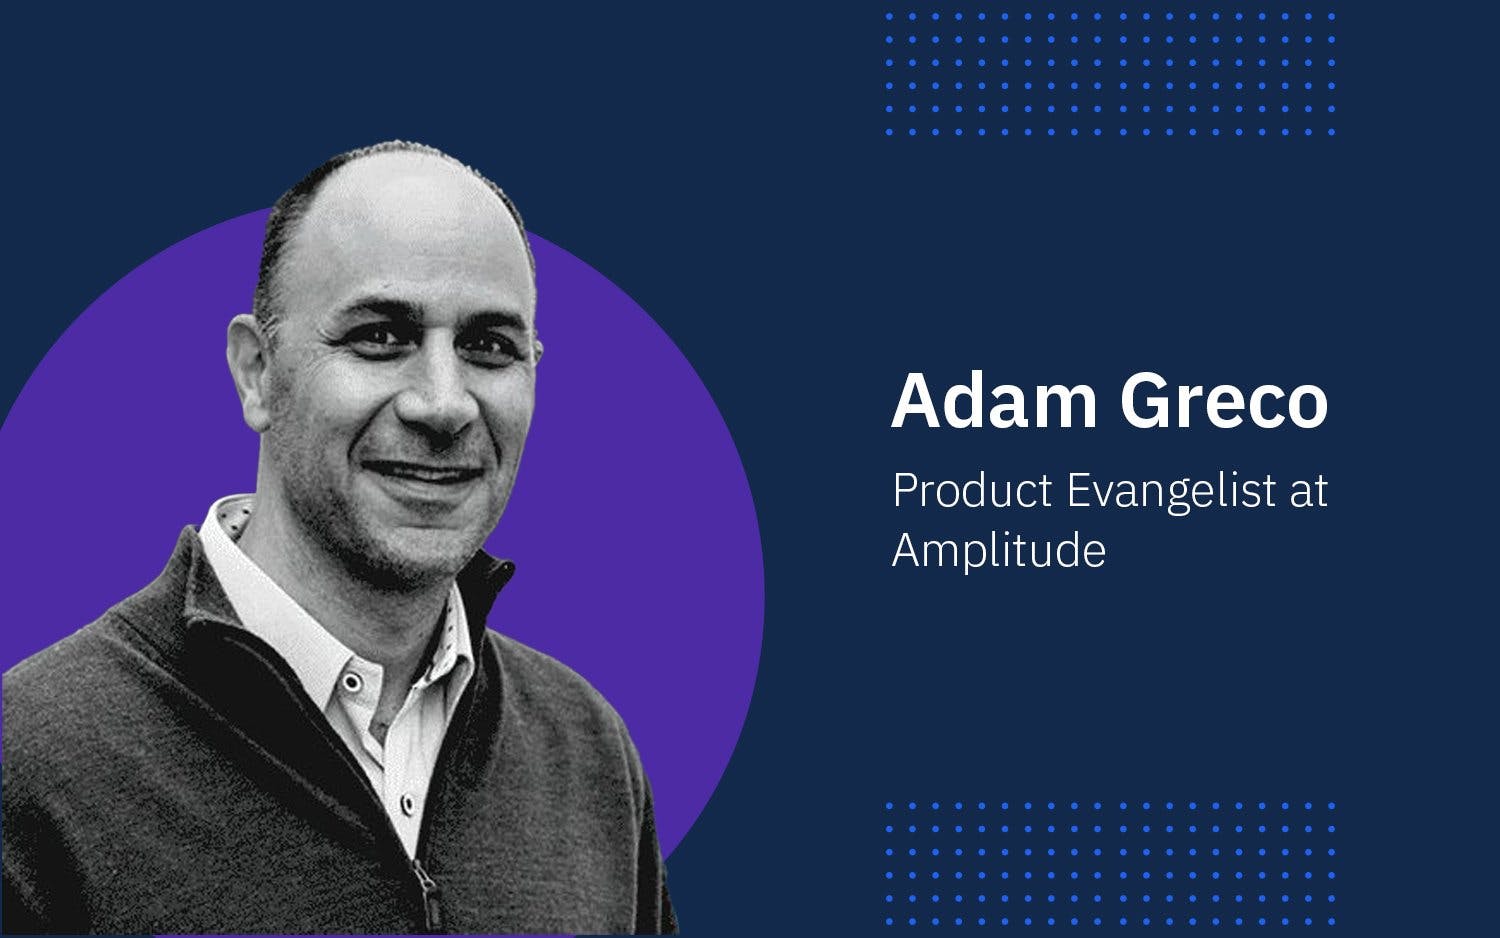 Adam Greco joins Amplitude as Product Evangelist